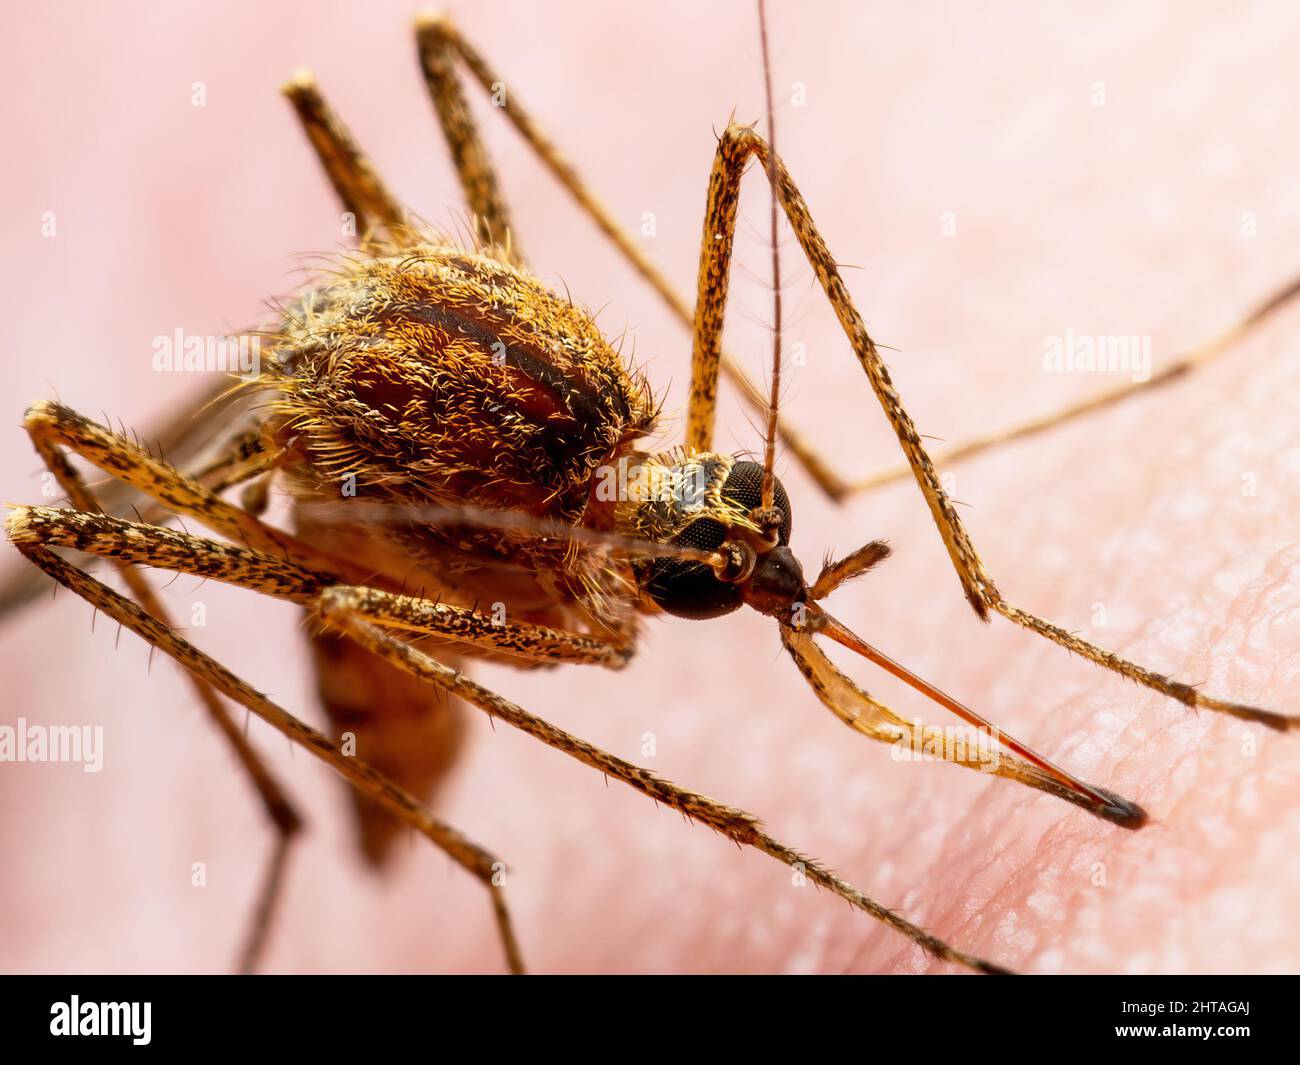 Malaria Infected Mosquito Bite. Leishmaniasis, Encephalitis, Yellow Fever, Dengue, Malaria Disease, Mayaro or Zika Virus Infectious Culex Mosquitoe Stock Photo